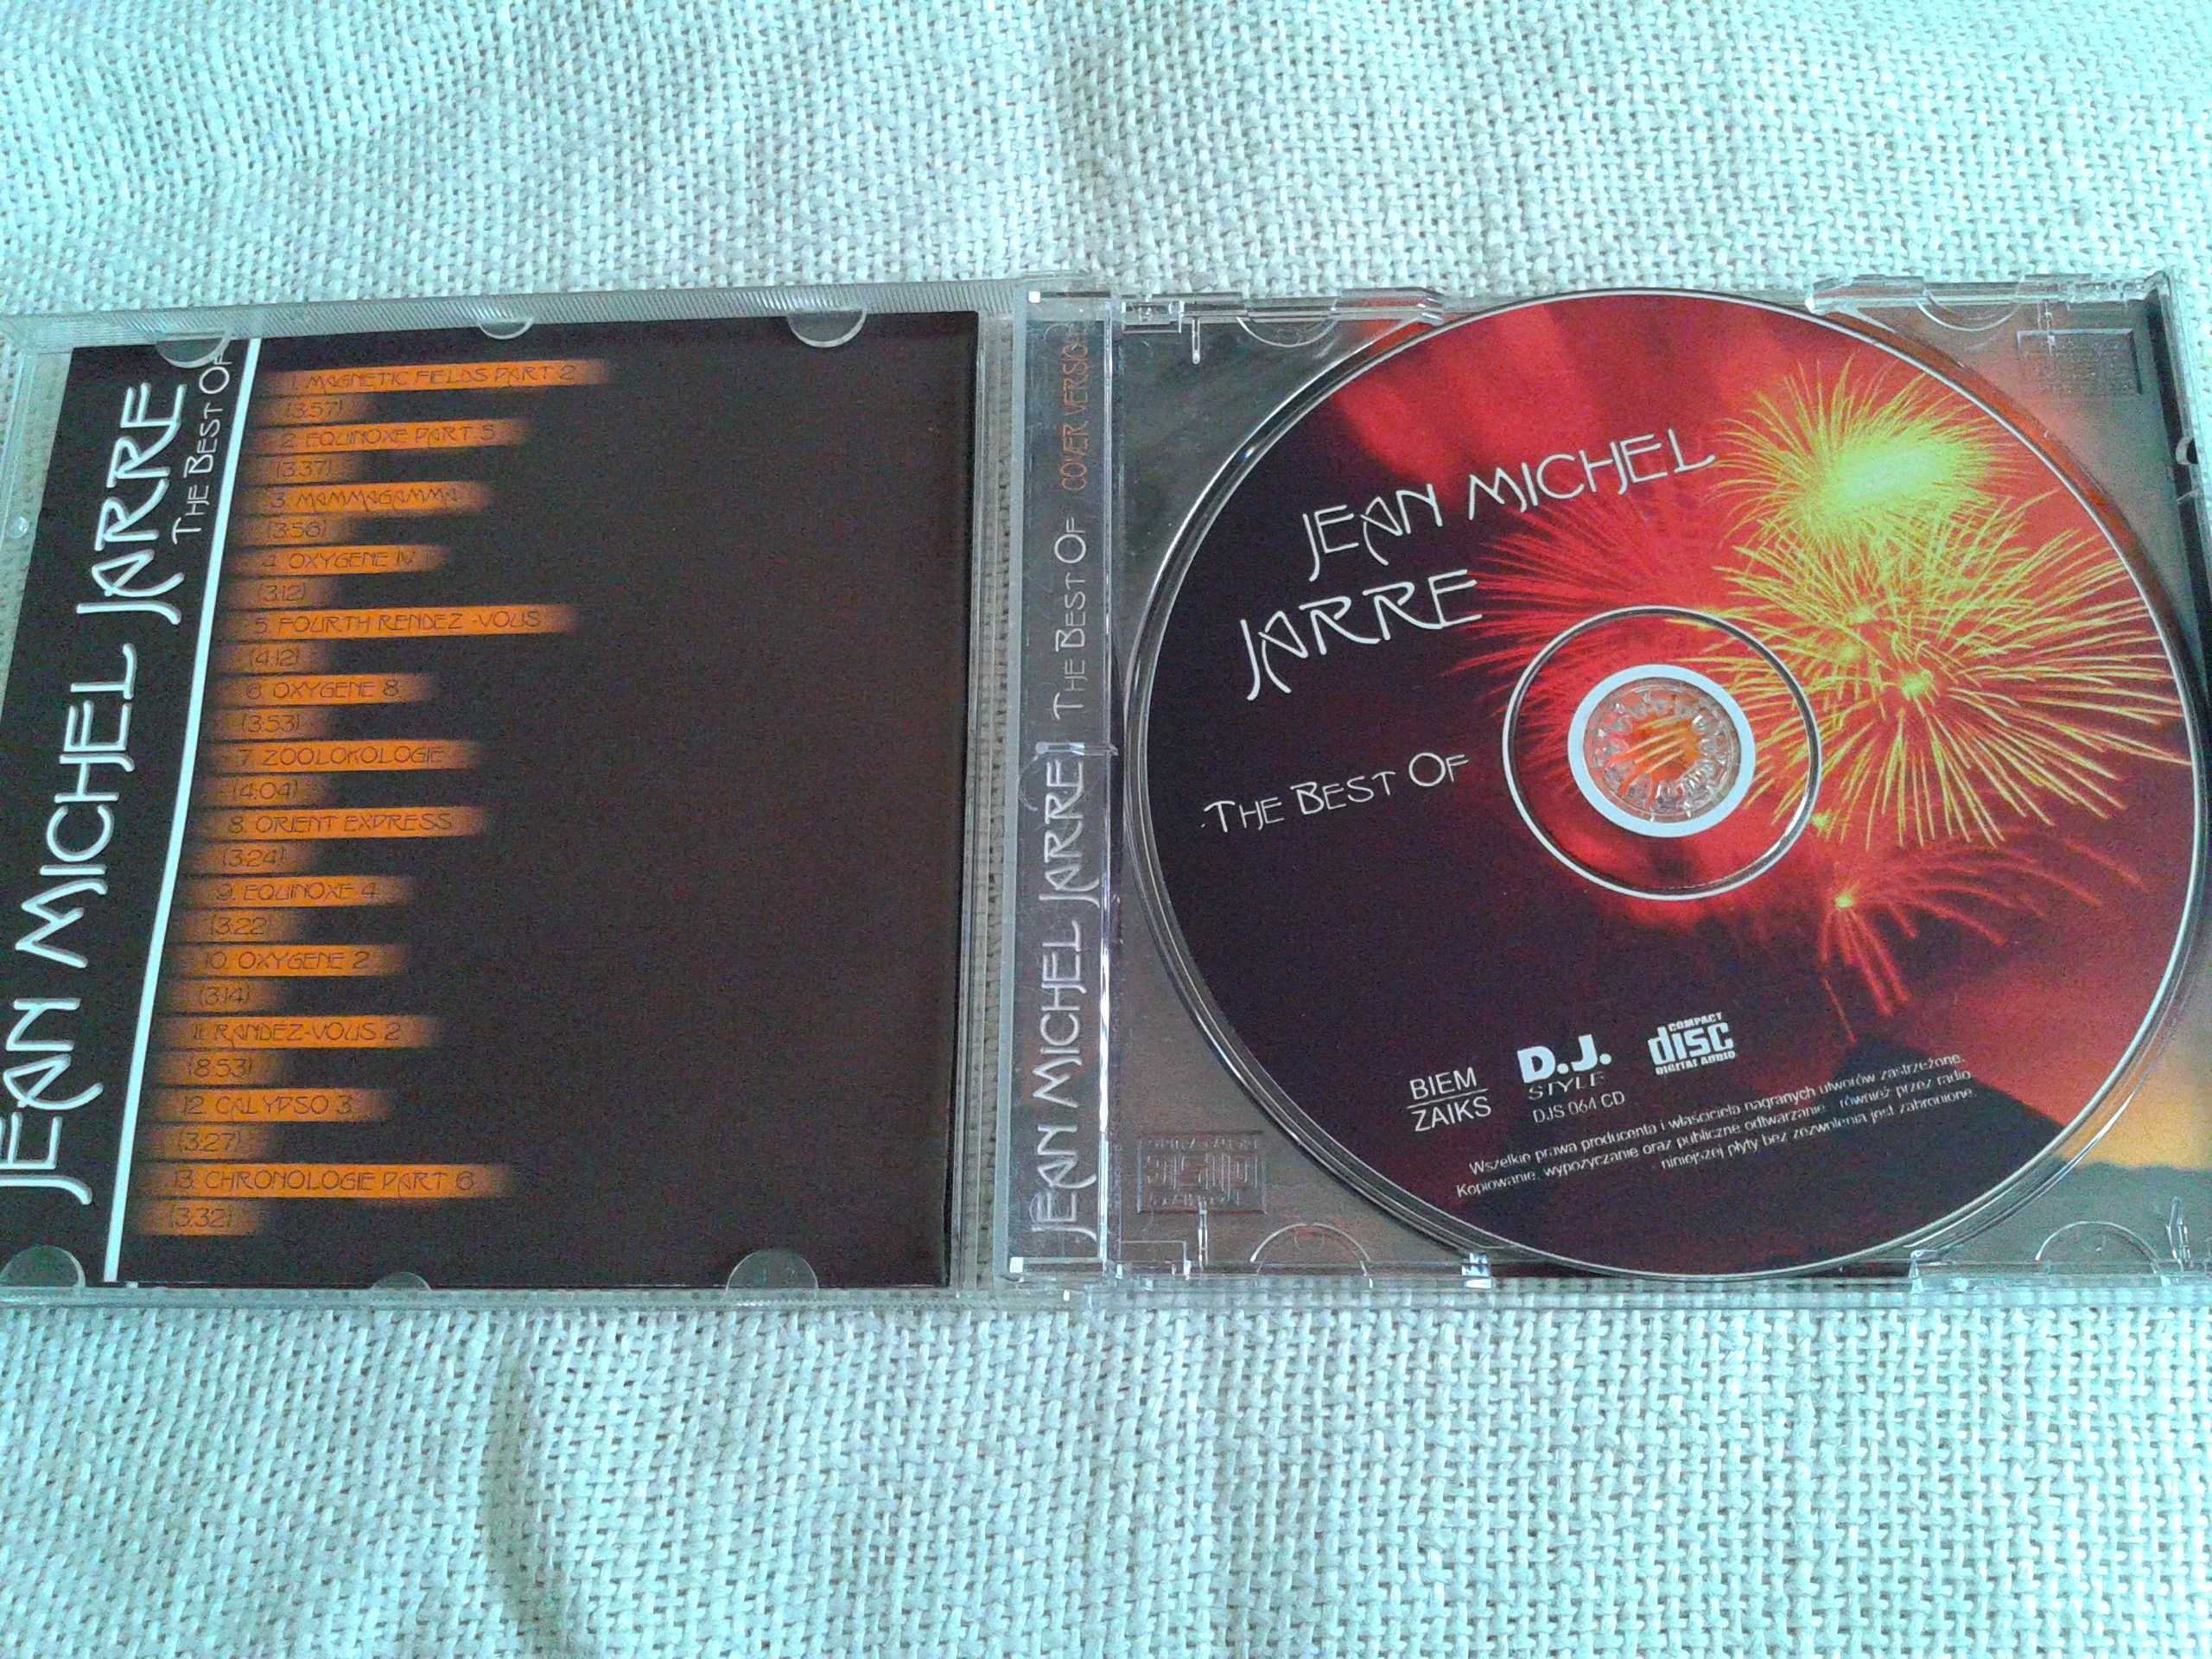 Jean Michel Jarre - The Best Of  CD